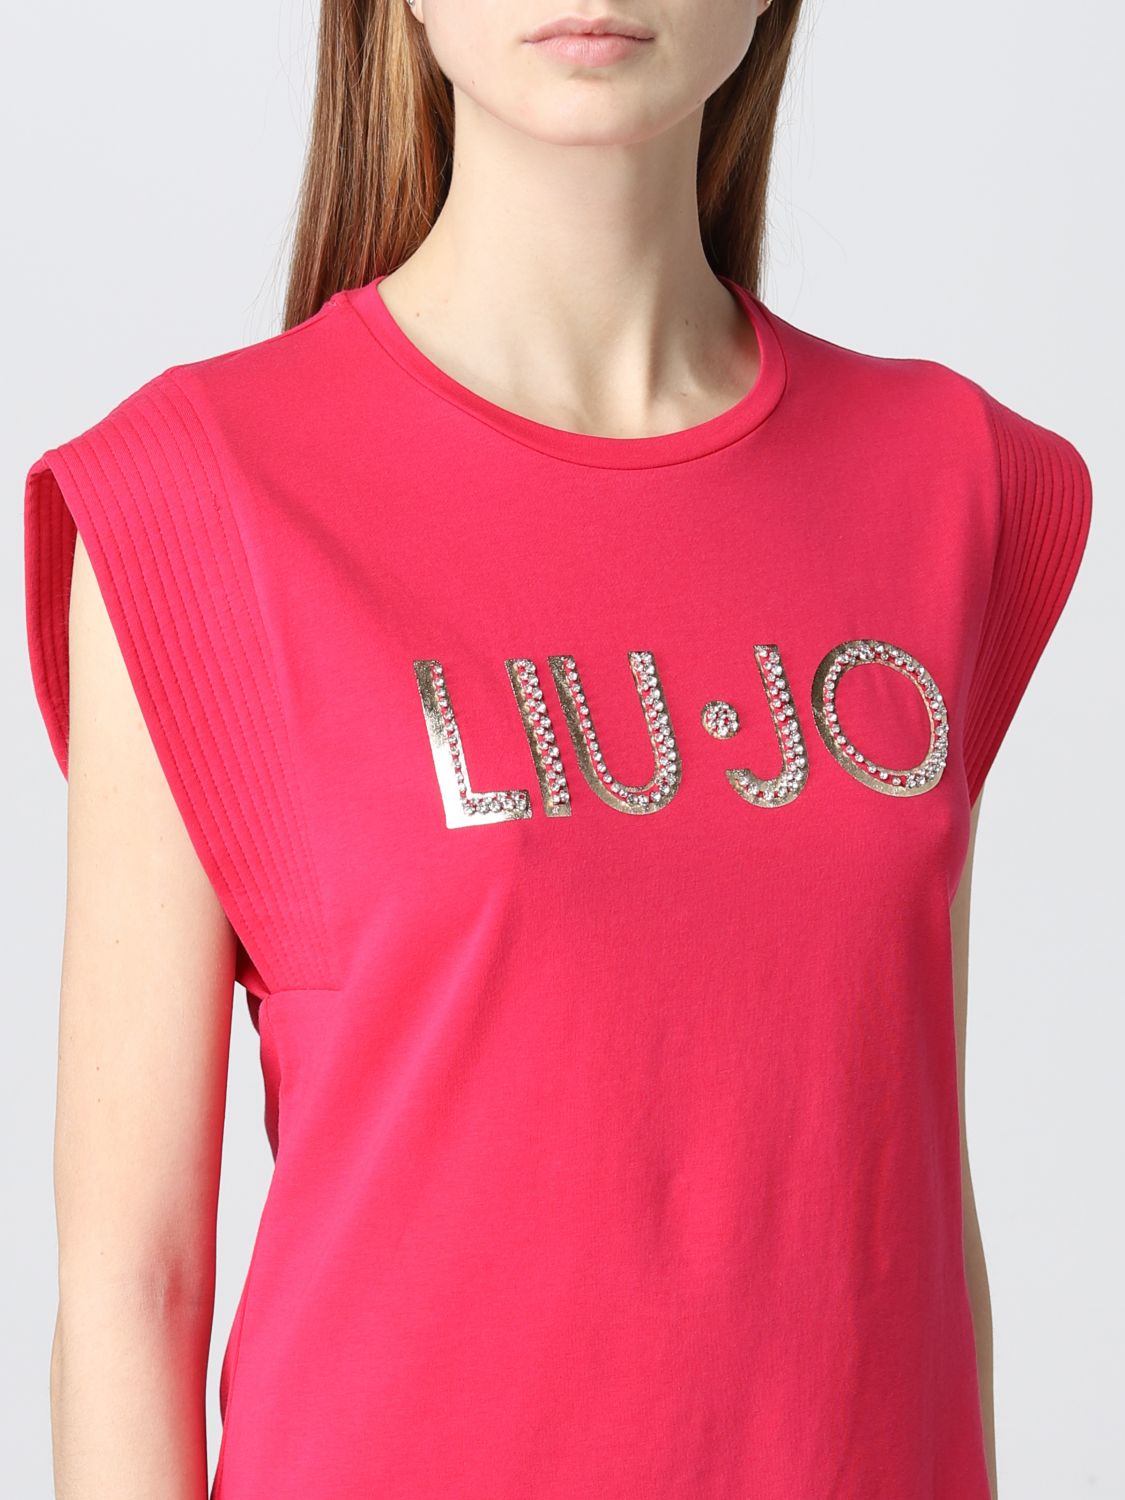 Outlet de Liu Camiseta para mujer, Fucsia | Camiseta Liu Jo CA2106JS003 en línea en GIGLIO.COM